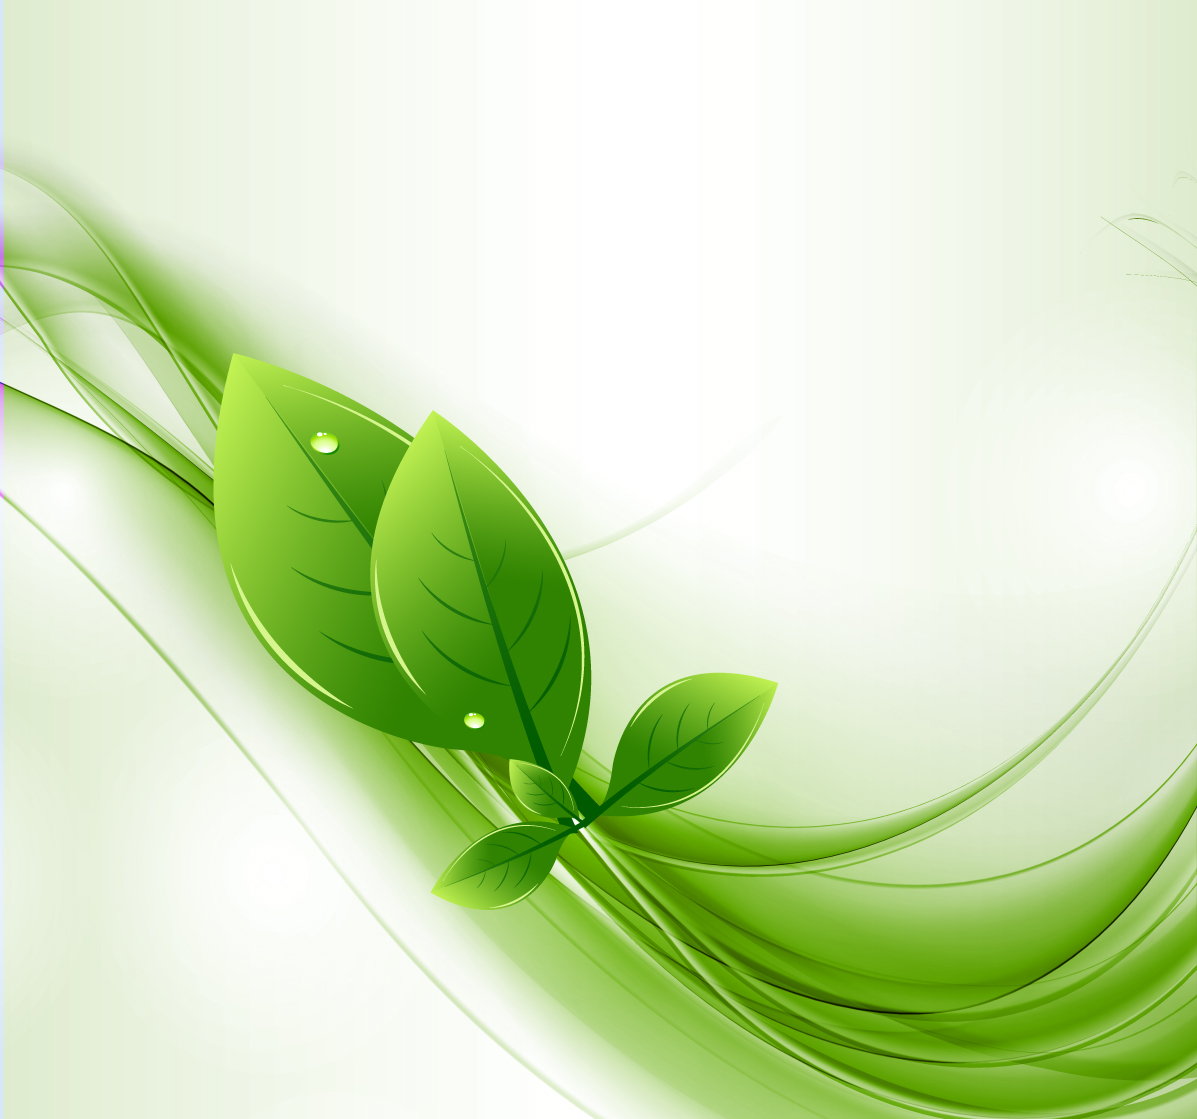 Green Eco-Leaf Vector Image